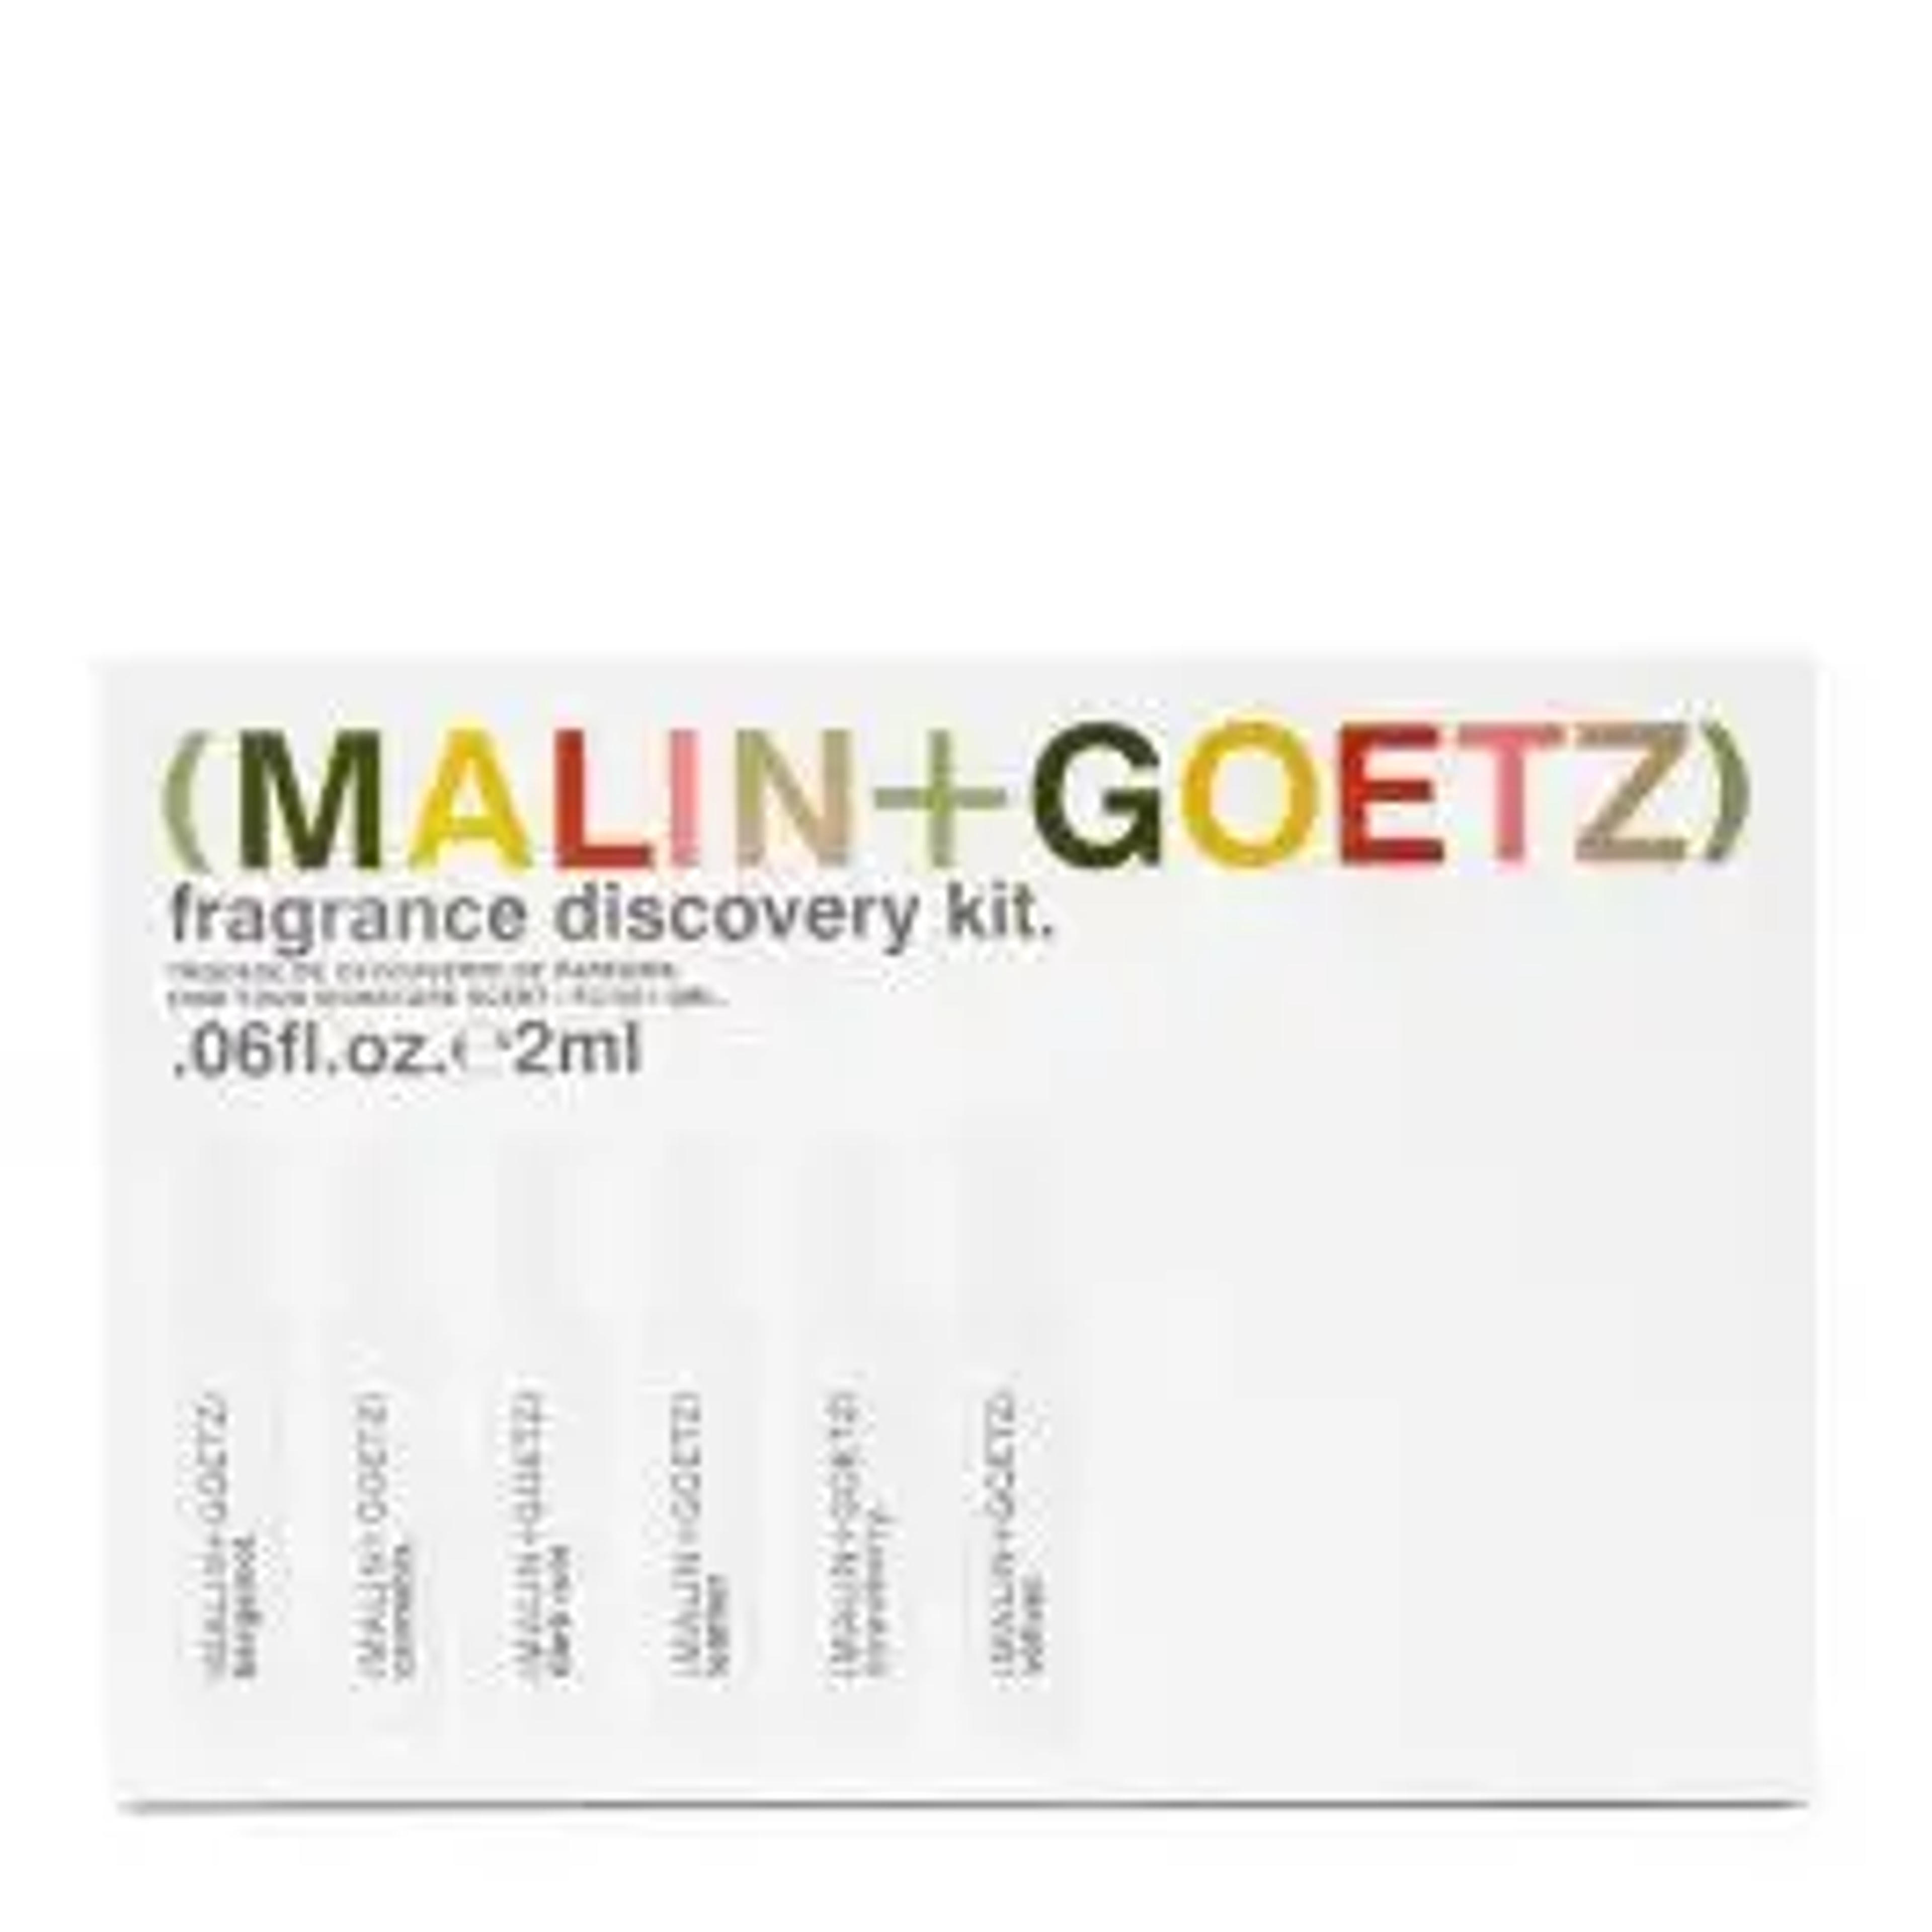 fragrance discovery kit | (MALIN+GOETZ)